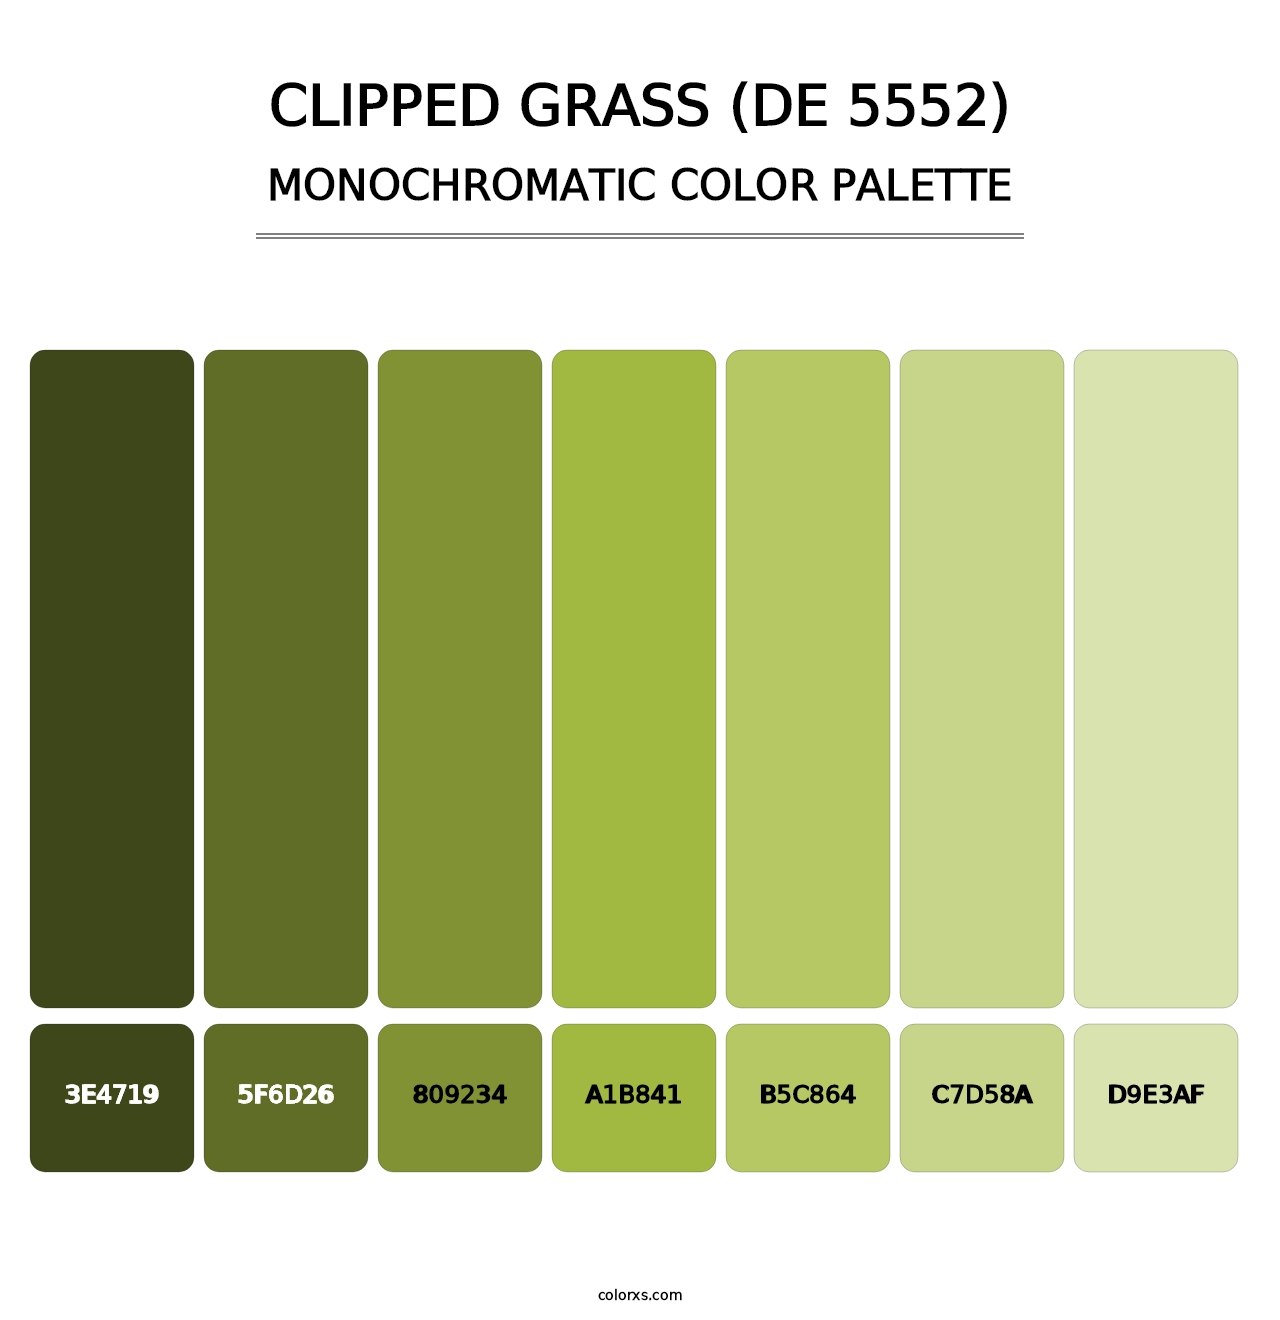 Clipped Grass (DE 5552) - Monochromatic Color Palette